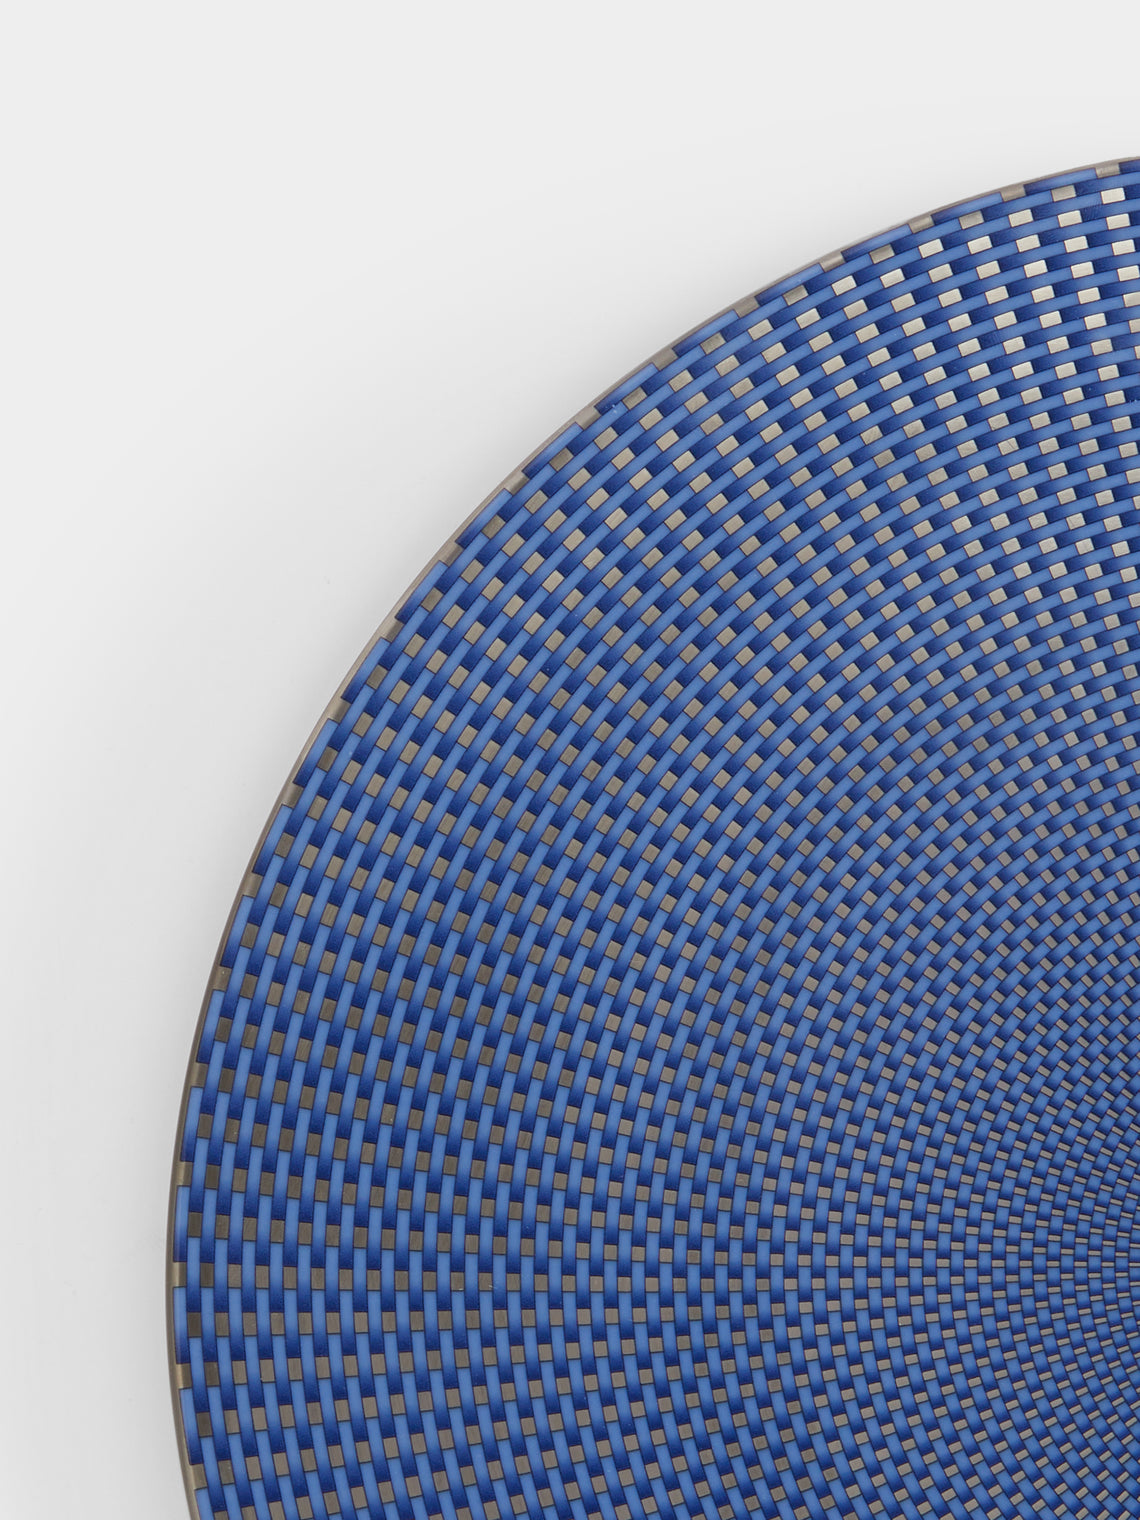 Raynaud - Trésor Bleu Porcelain Charger Plate -  - ABASK